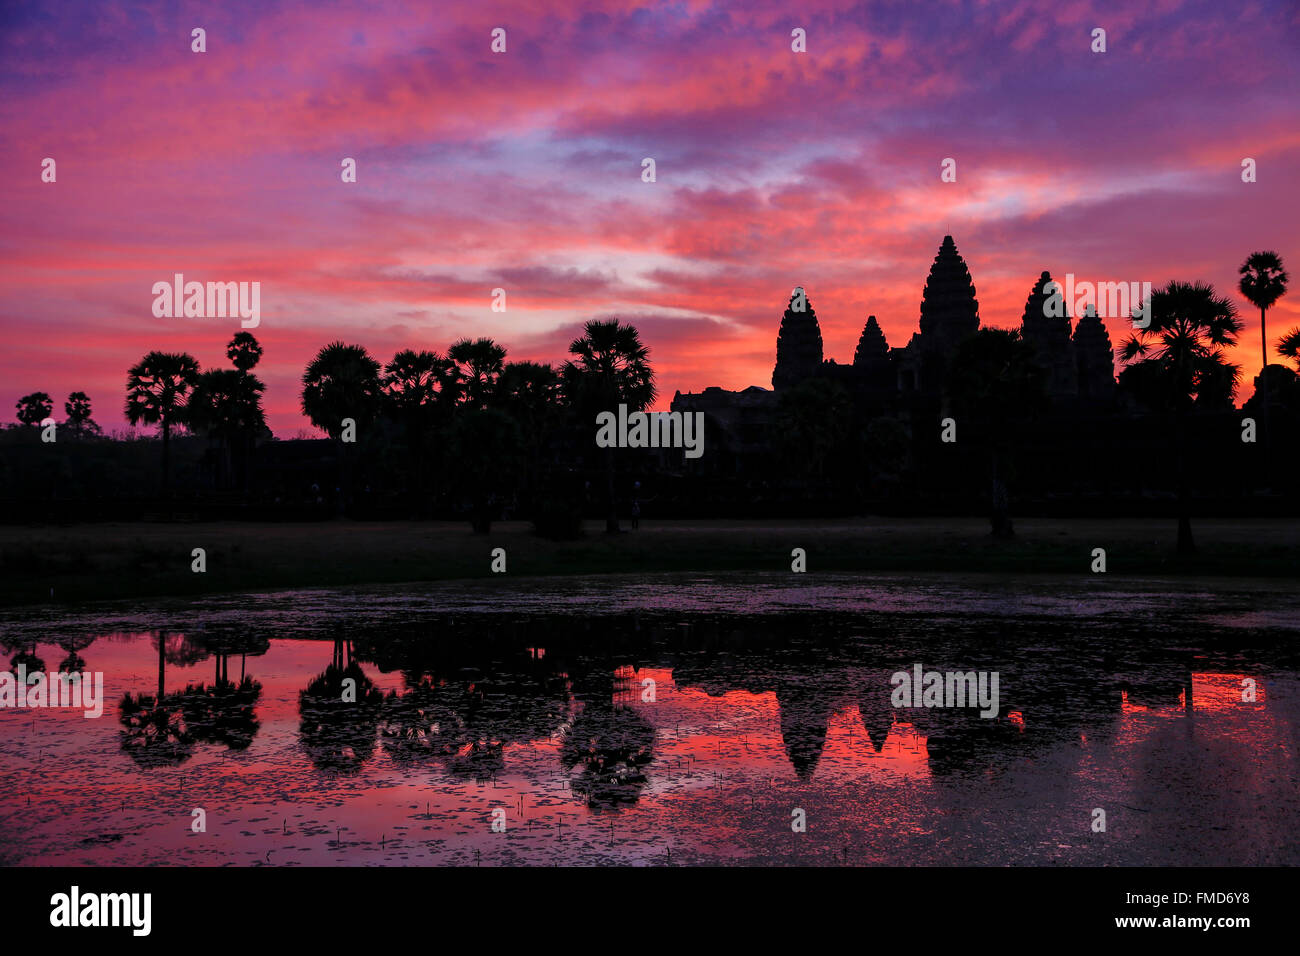 West Gallery stagliano contro il cielo mattutino, Angkor Wat, Parco Archeologico di Angkor, Siem Reap, Cambogia Foto Stock